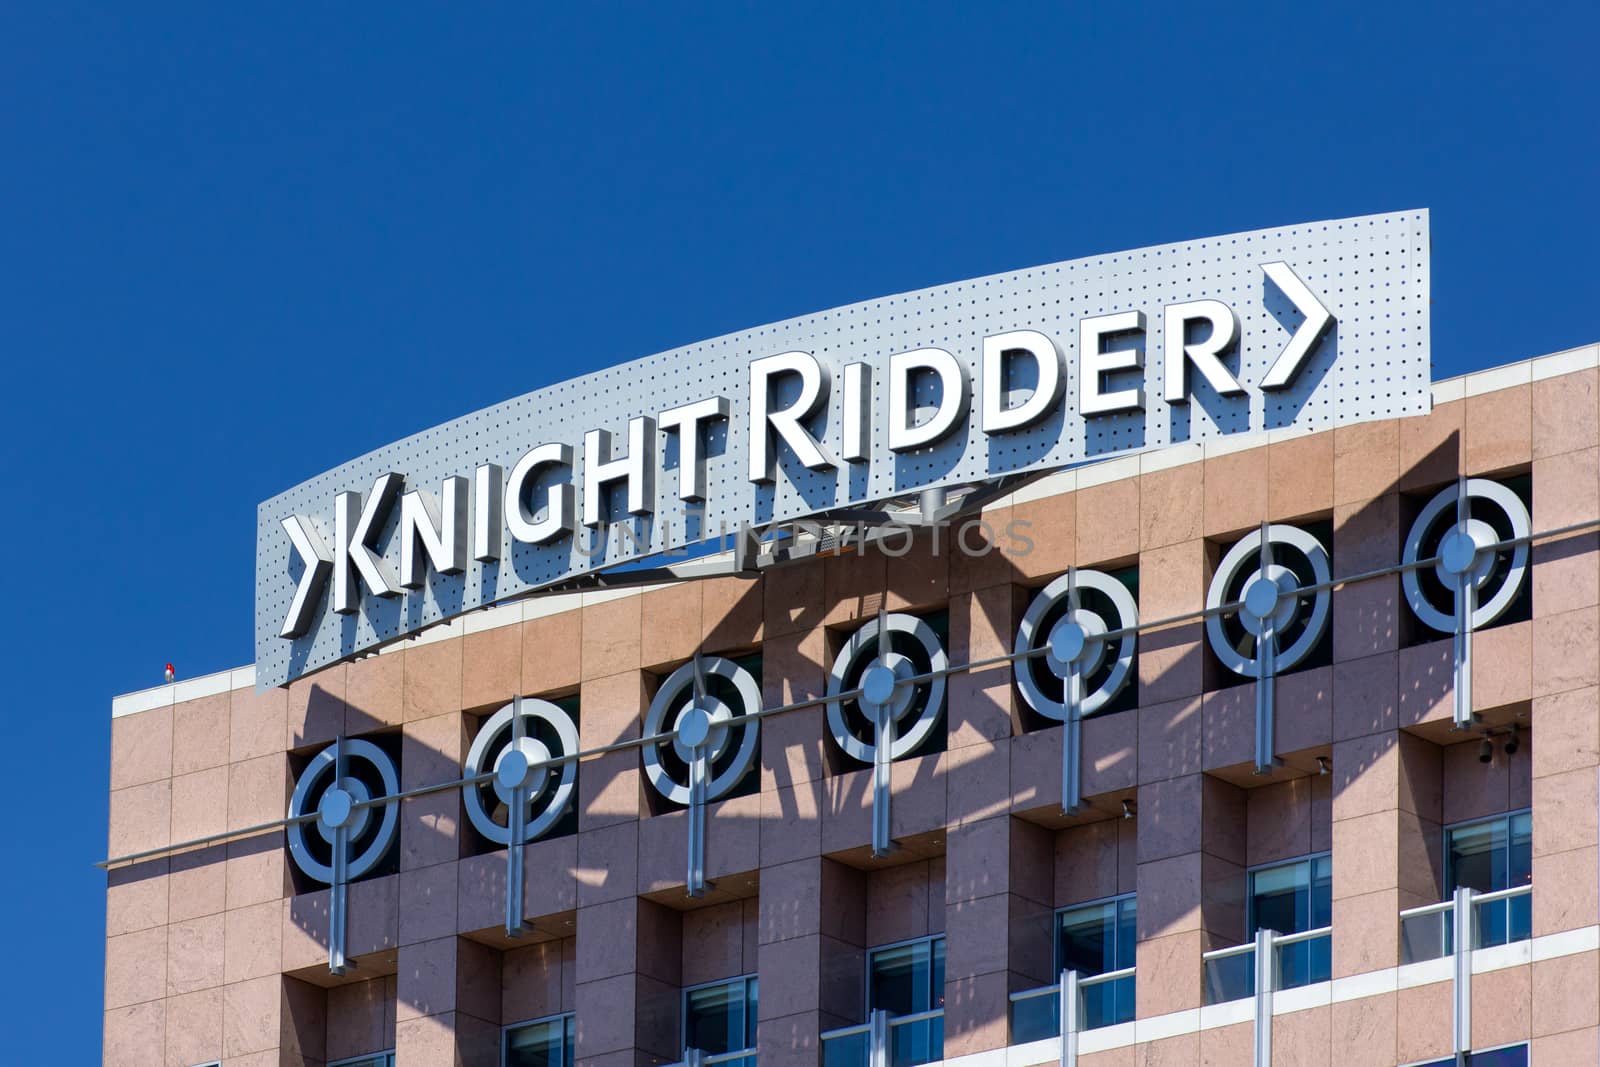 Landmark Knight Ridder building in downtown San Jose by wolterk